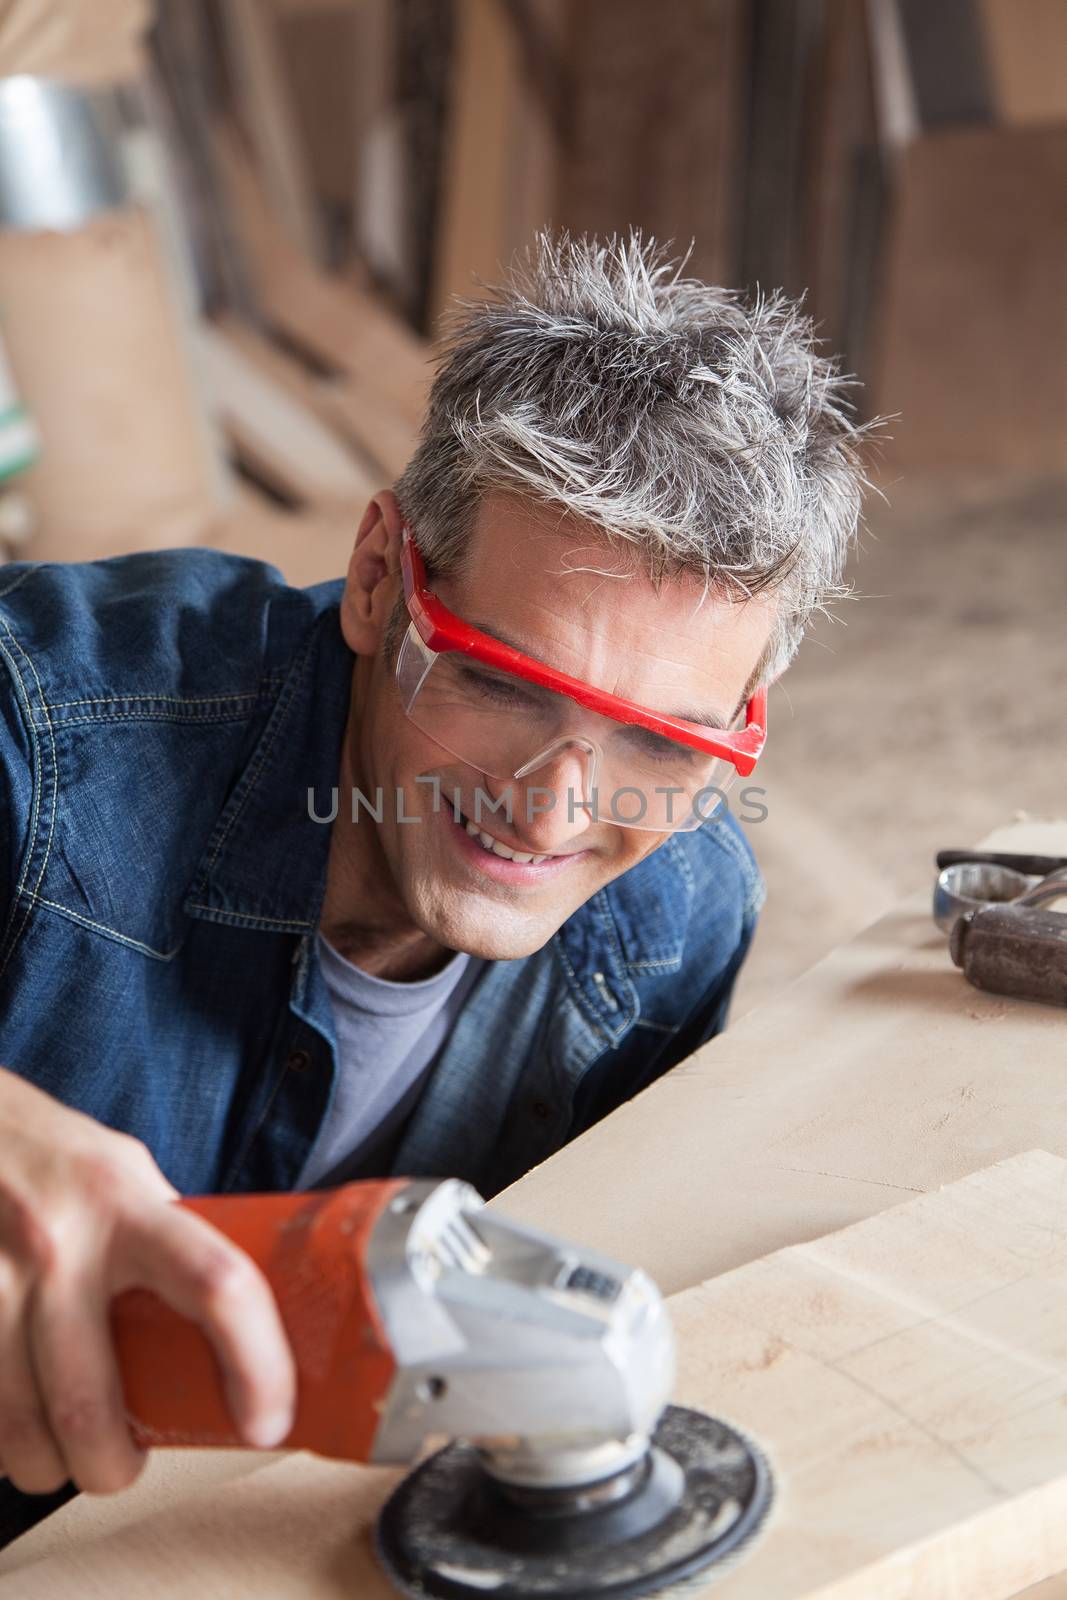 Smiling carpenter with a sander